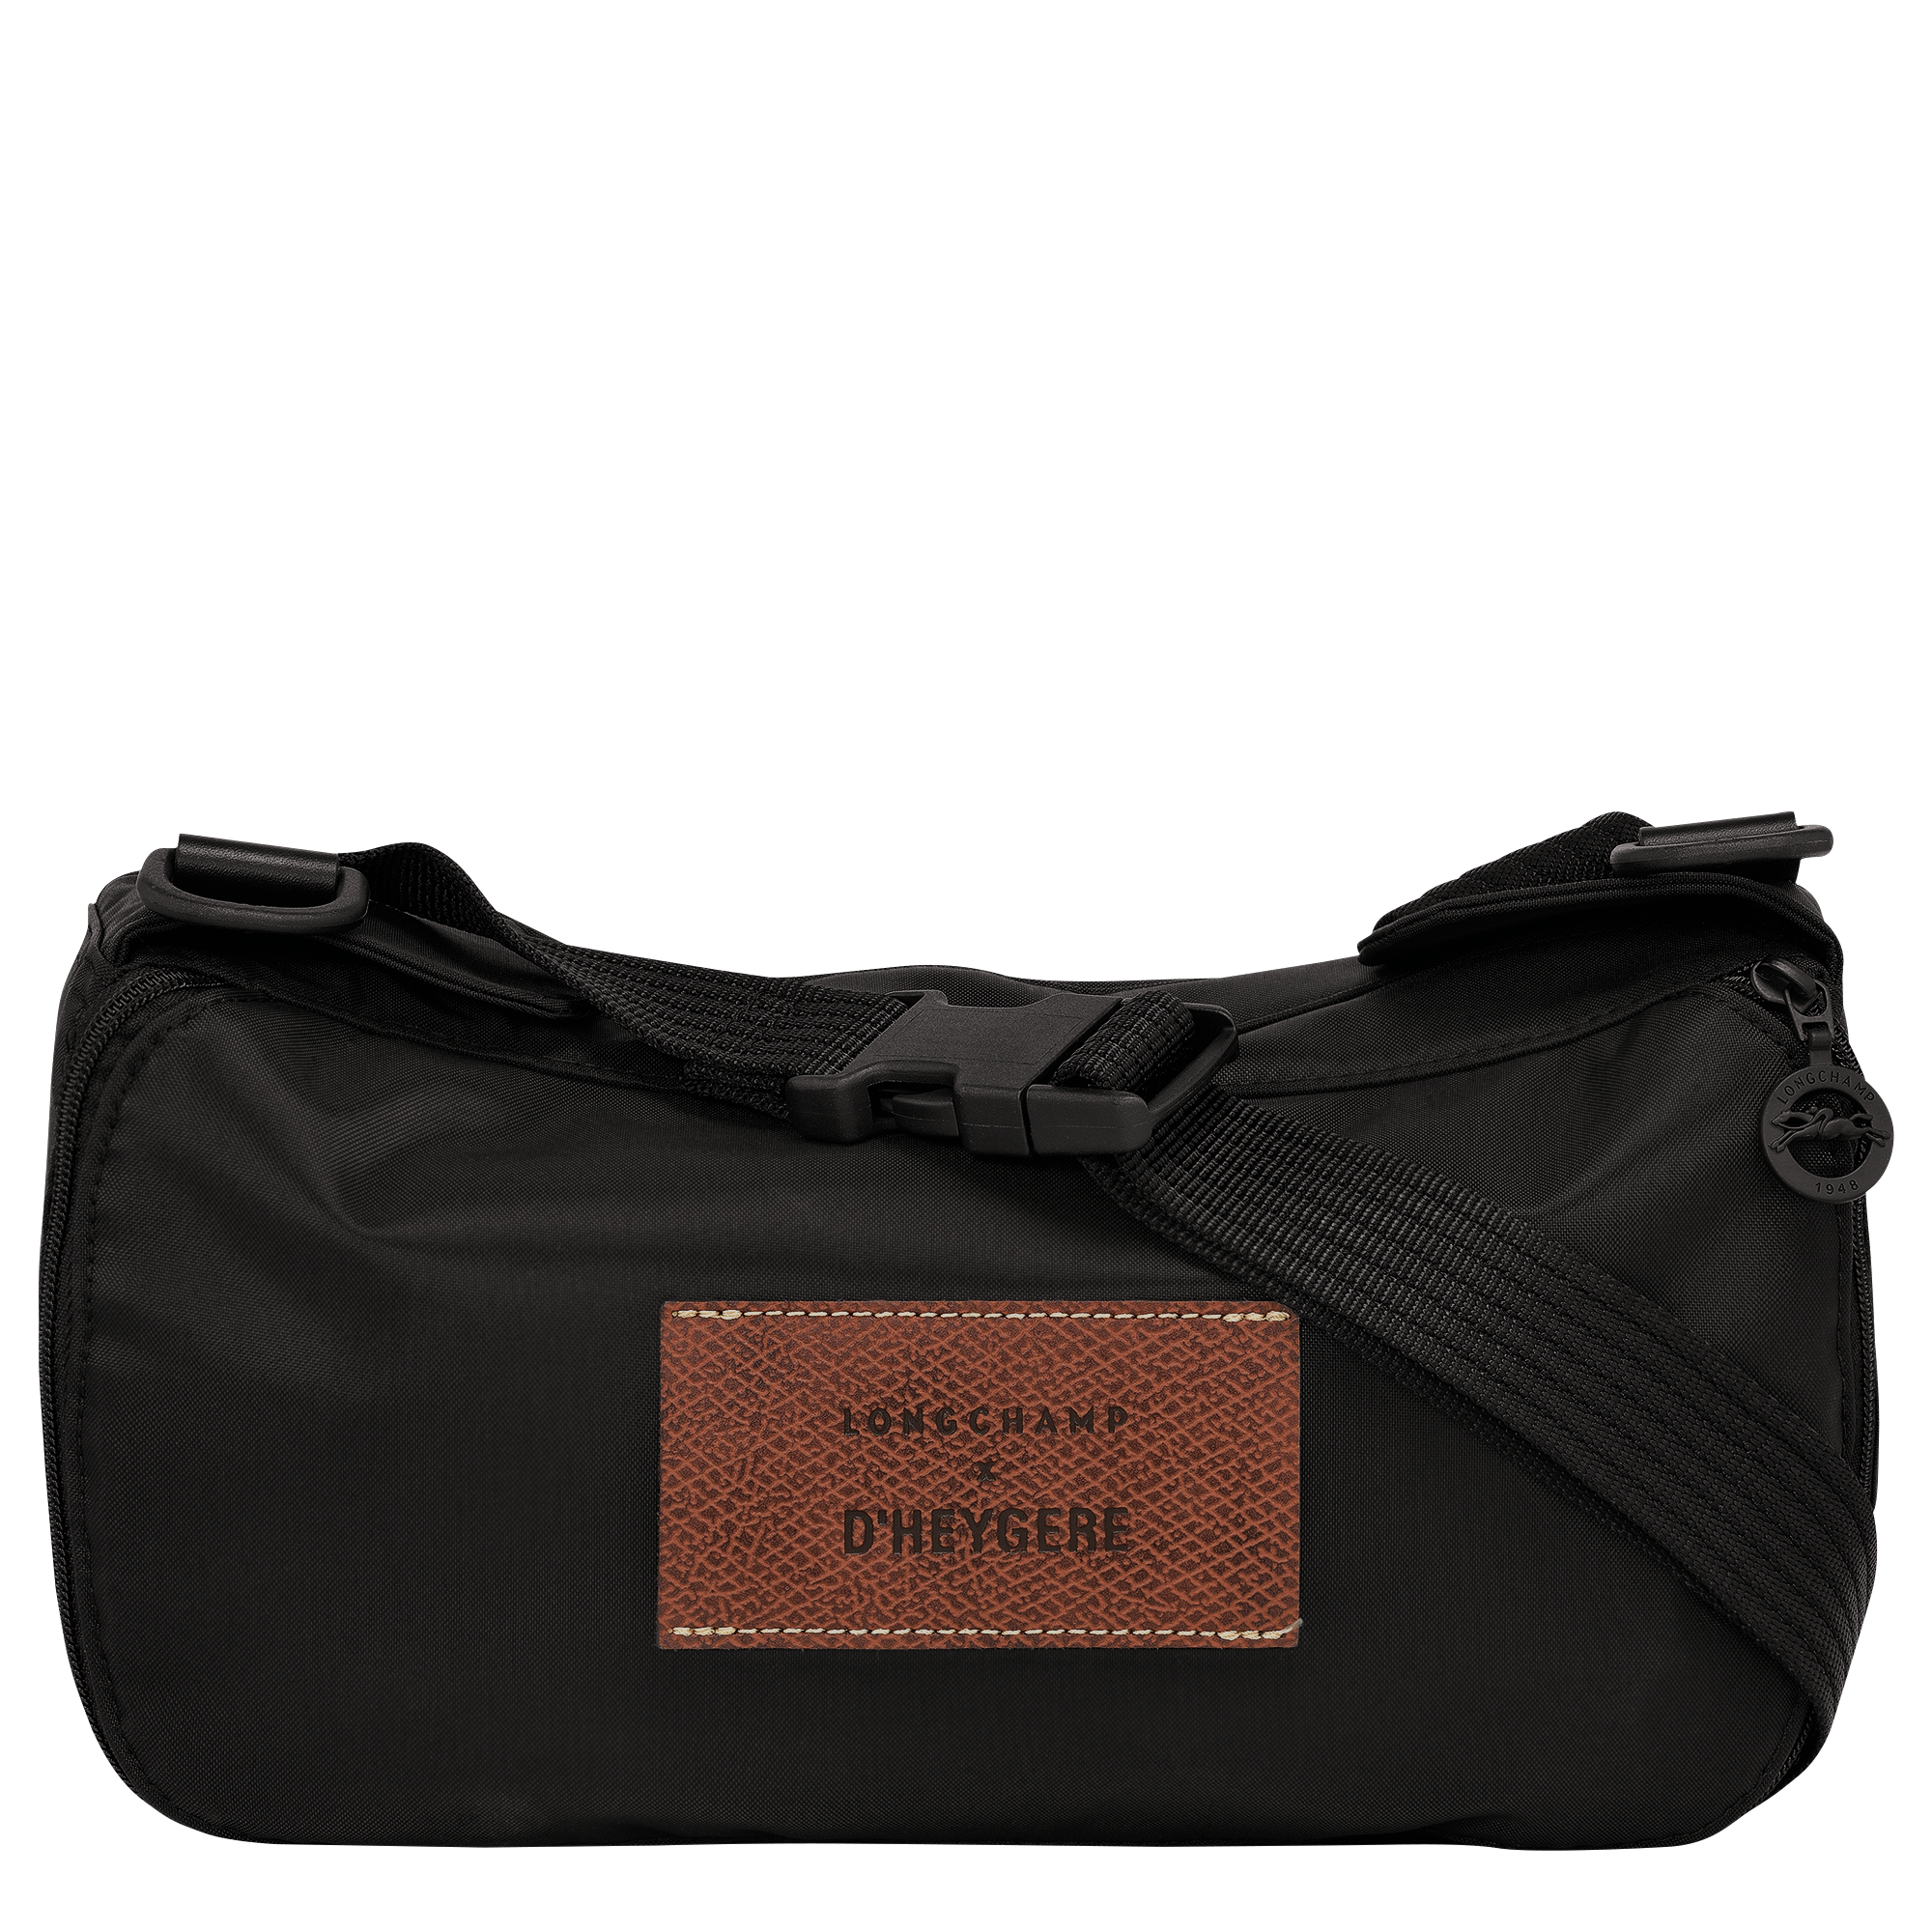 Longchamp X D_heygere black crossbody bag-backpack Php 25,500.png